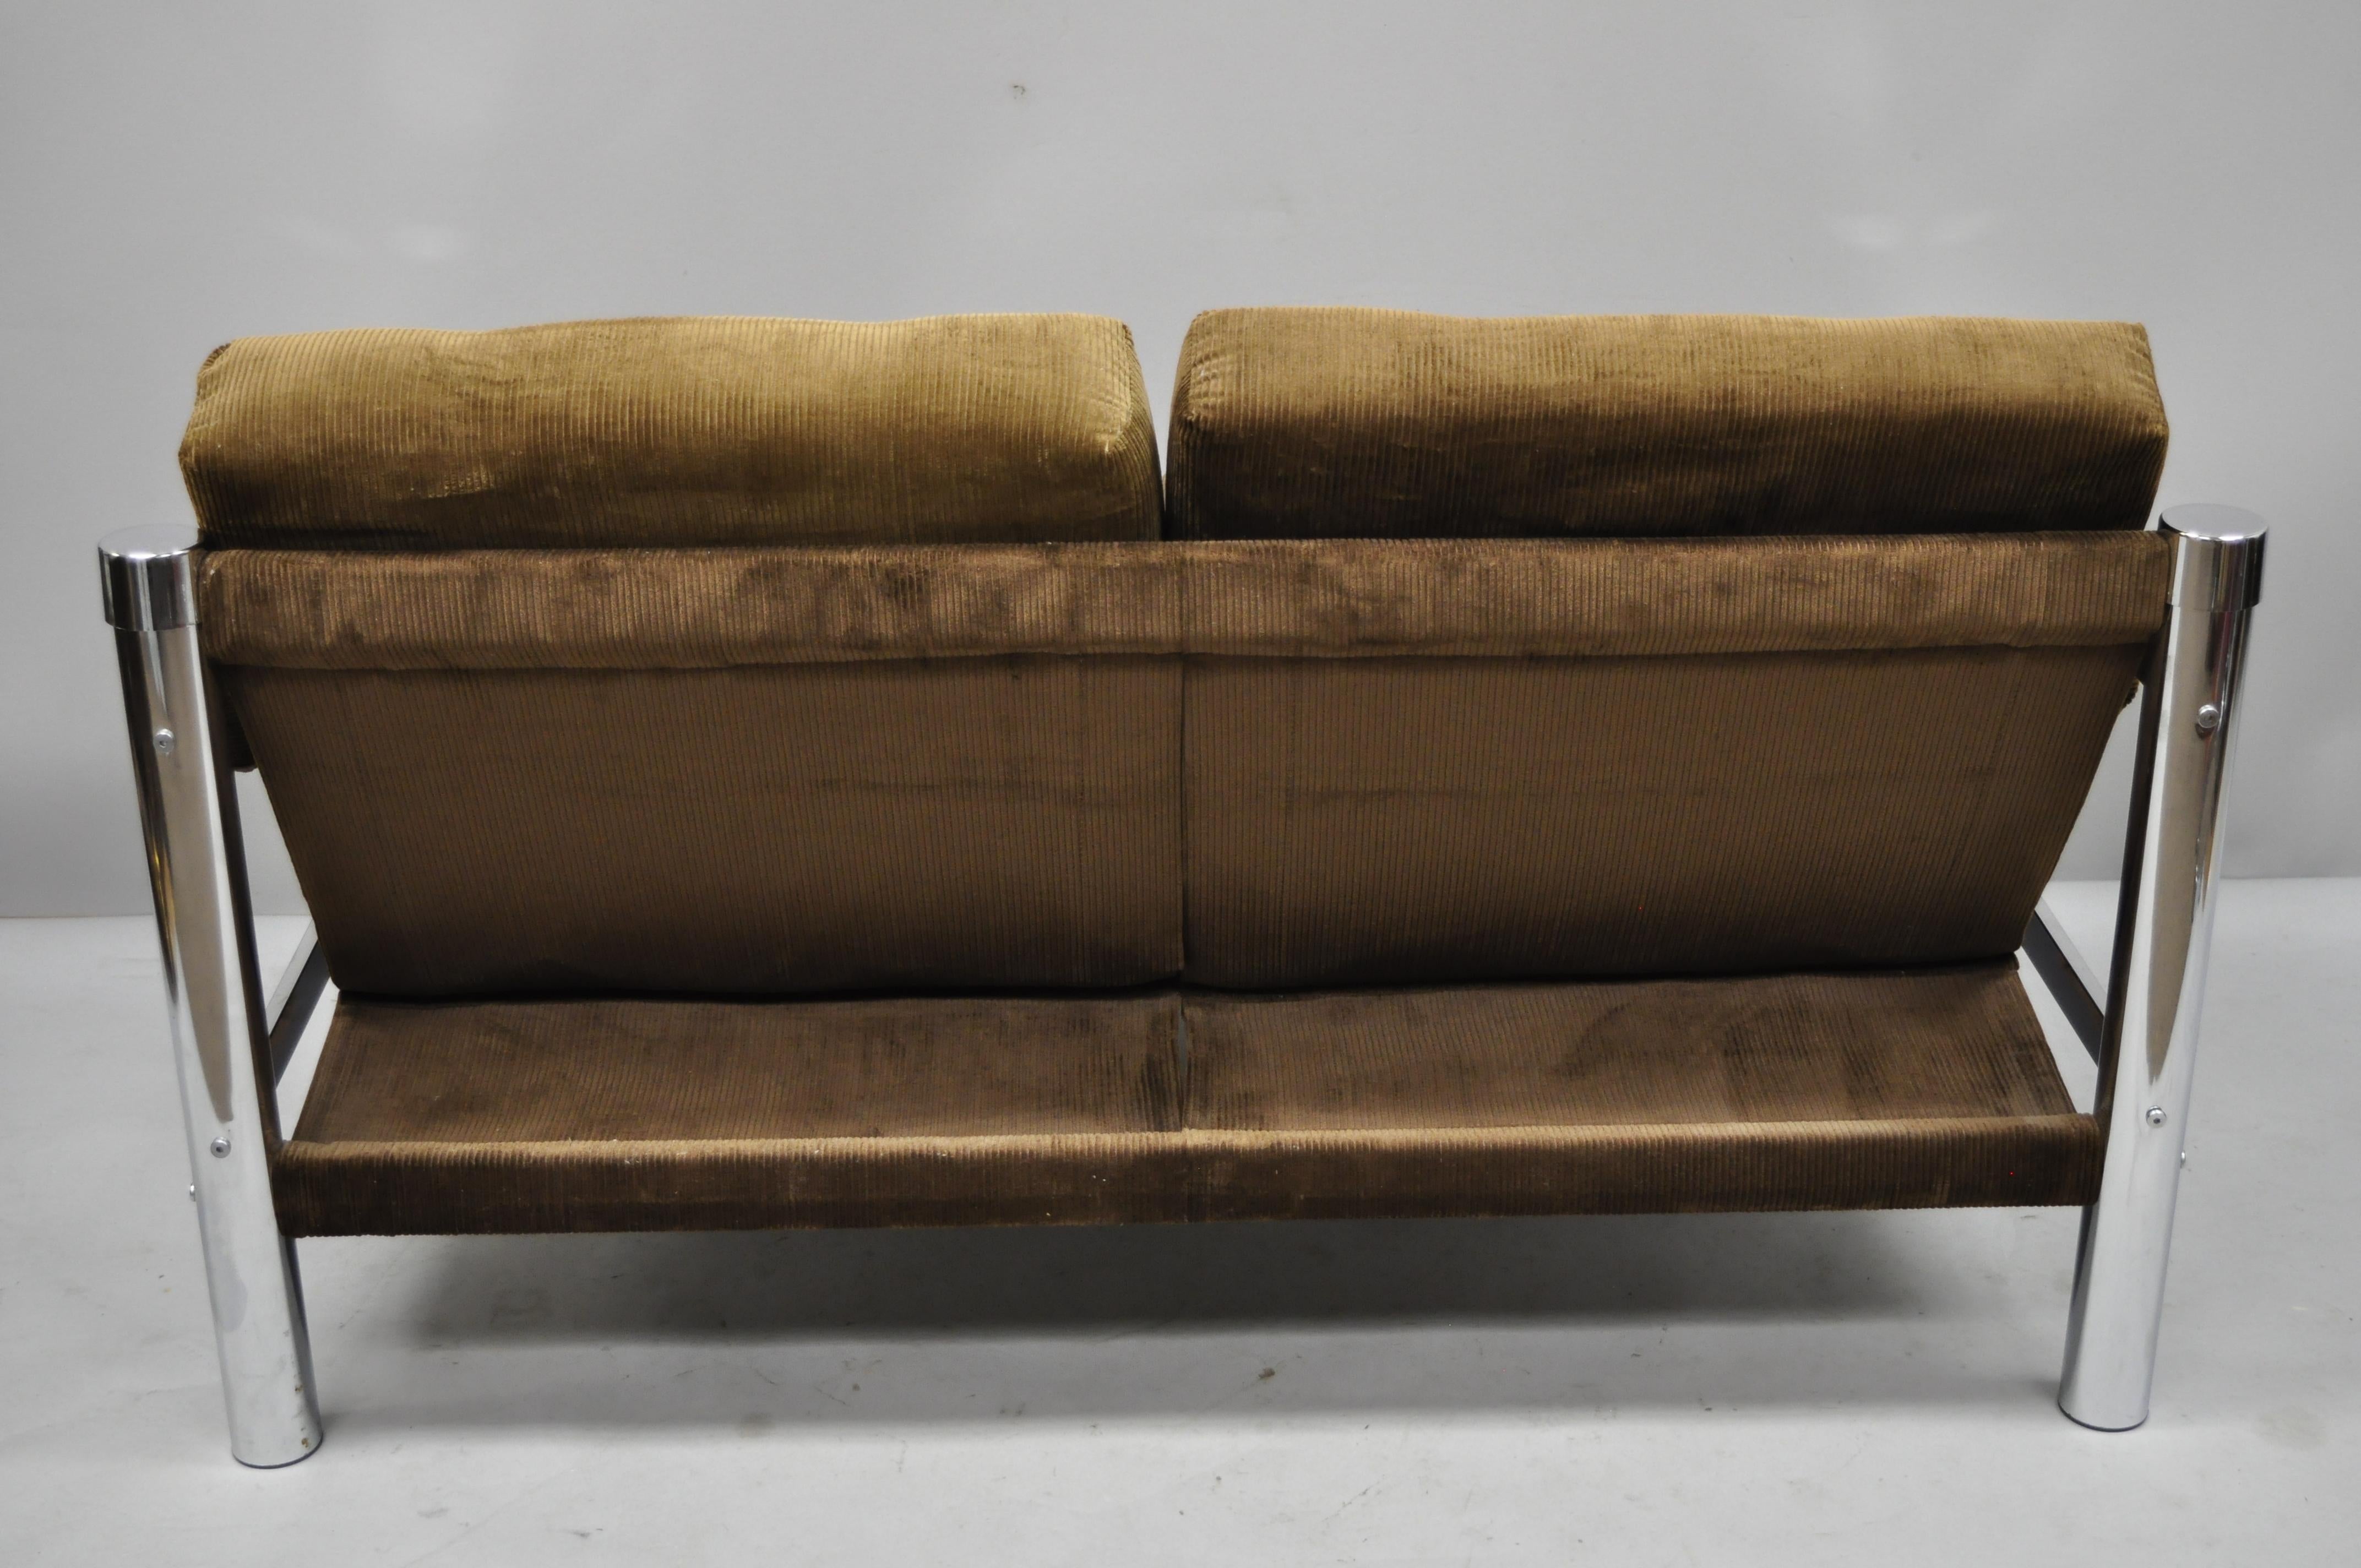 Late 20th Century Mid-Century Modern Chrome and Brown Corduroy Loveseat Sofa by James David Inc